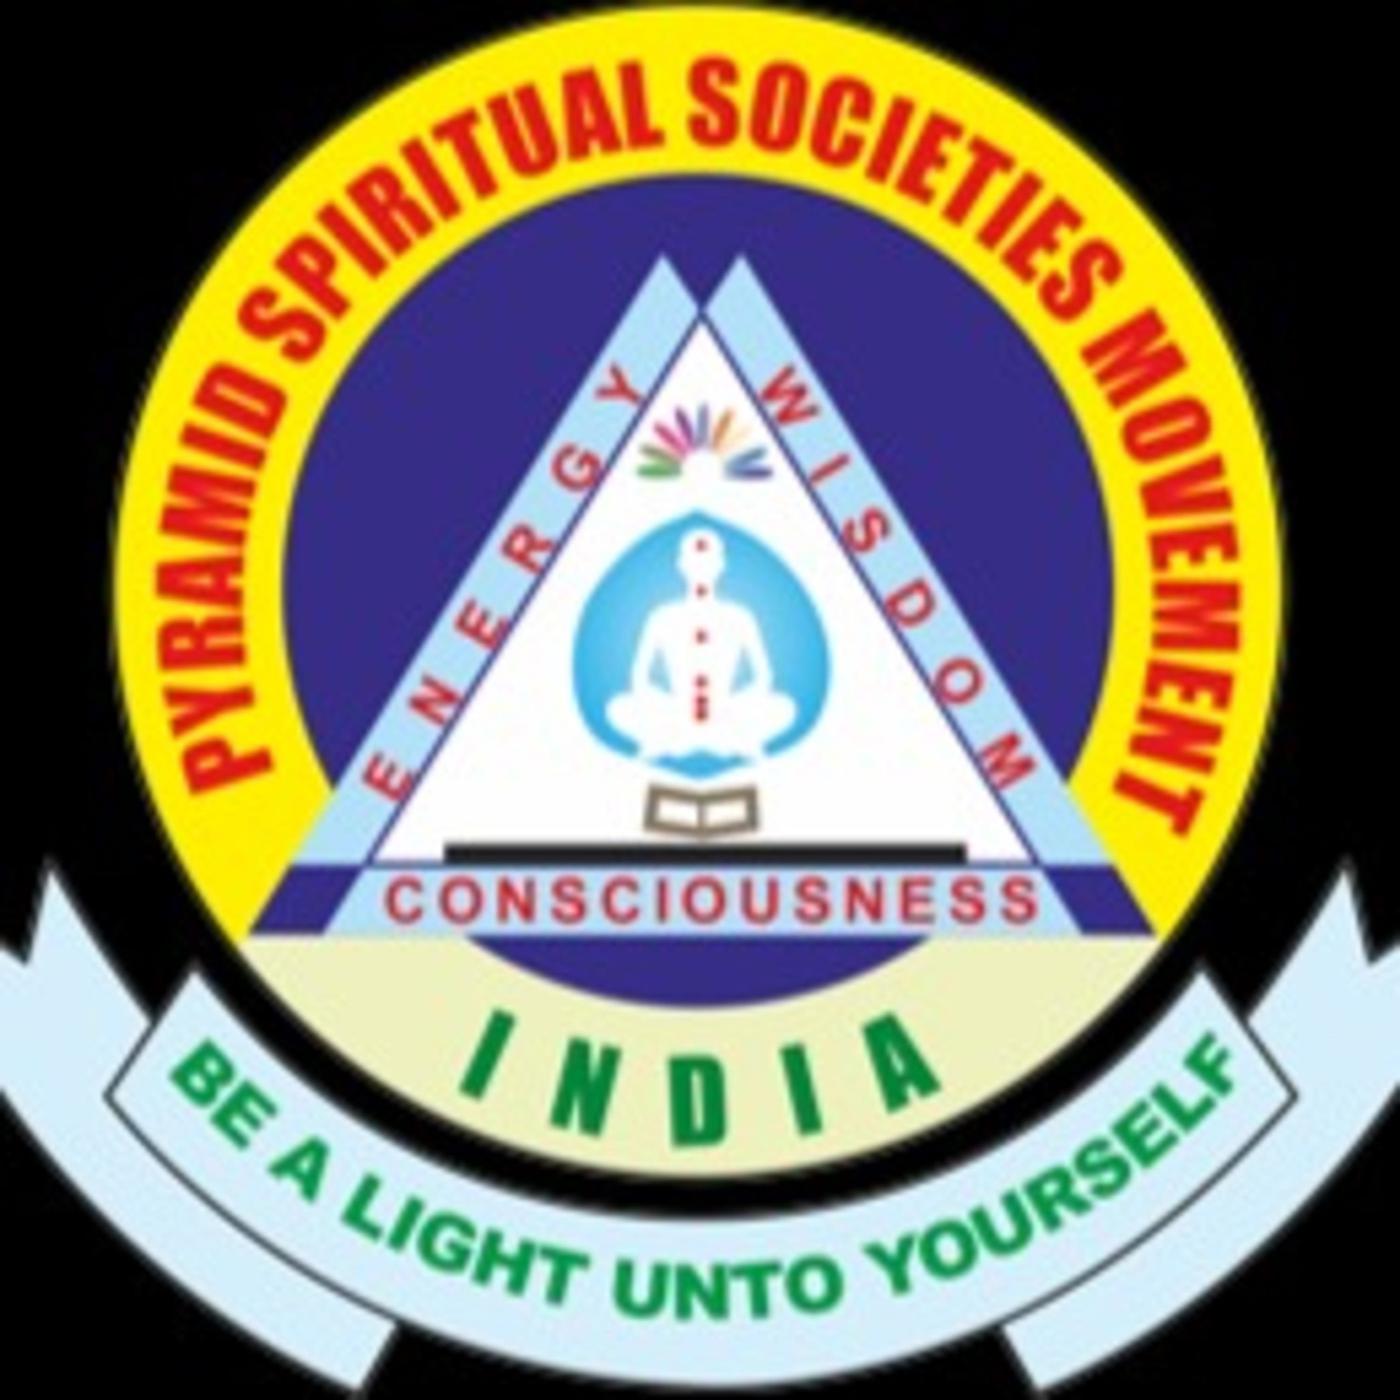 Pyramid Spiritual Societies Movement (podcast) - Pyramid Spiritual ...